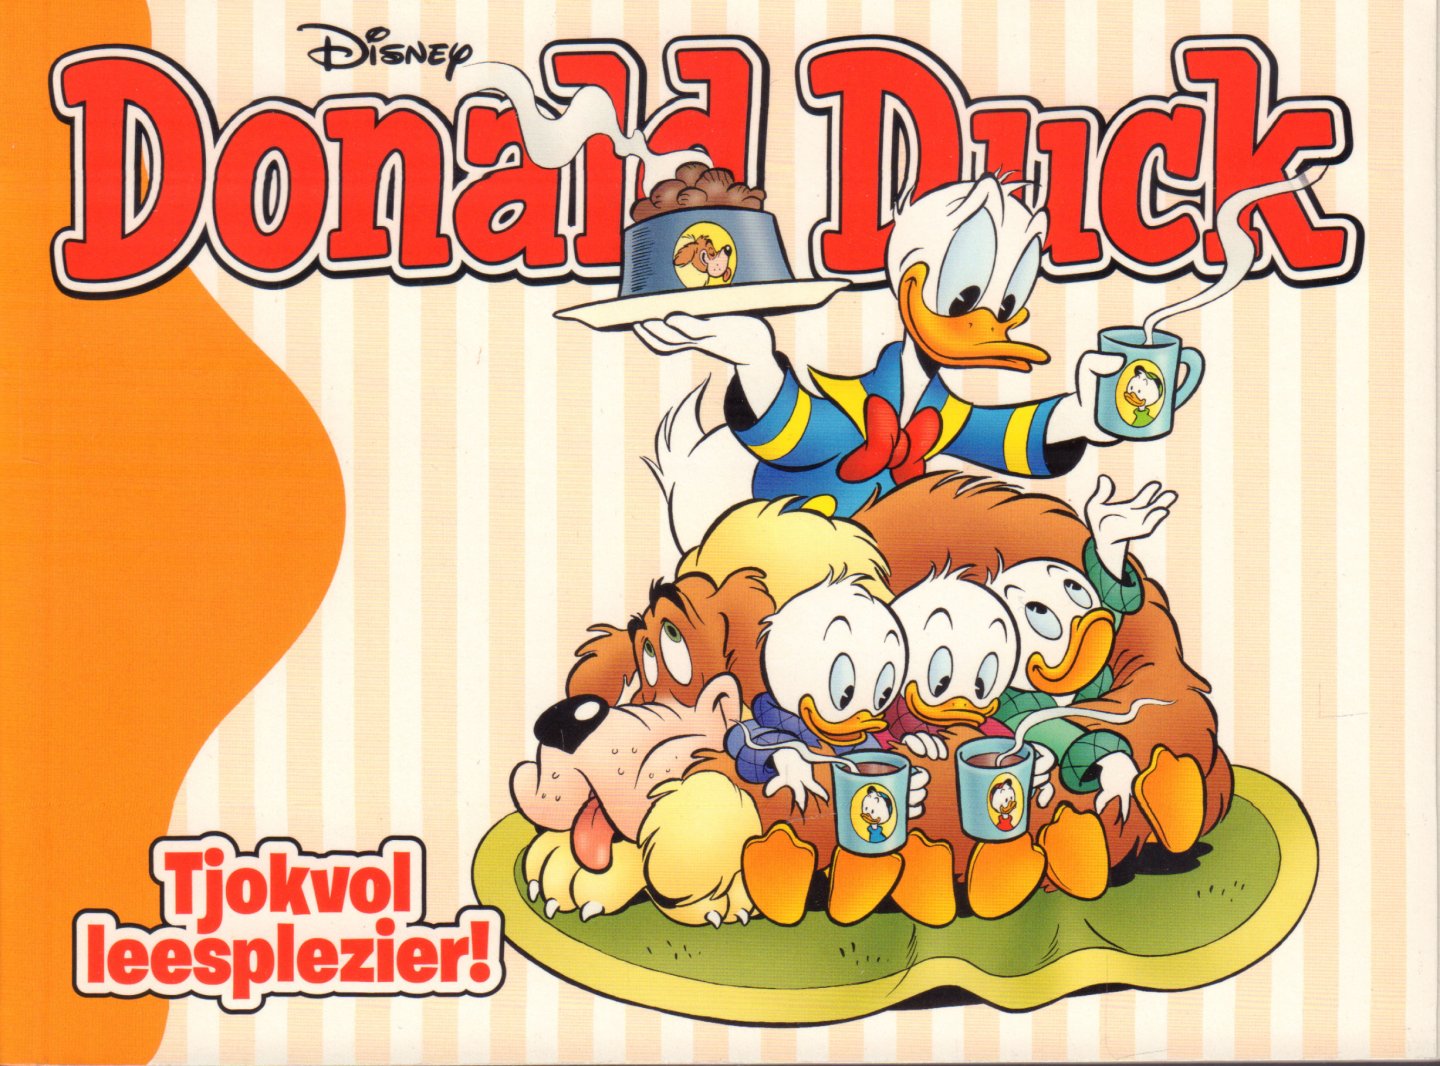 Walt Disney - Donald Duck - Tjokvol Leesplezier !, 95 pag. softcover, oblong formaat, gave staat